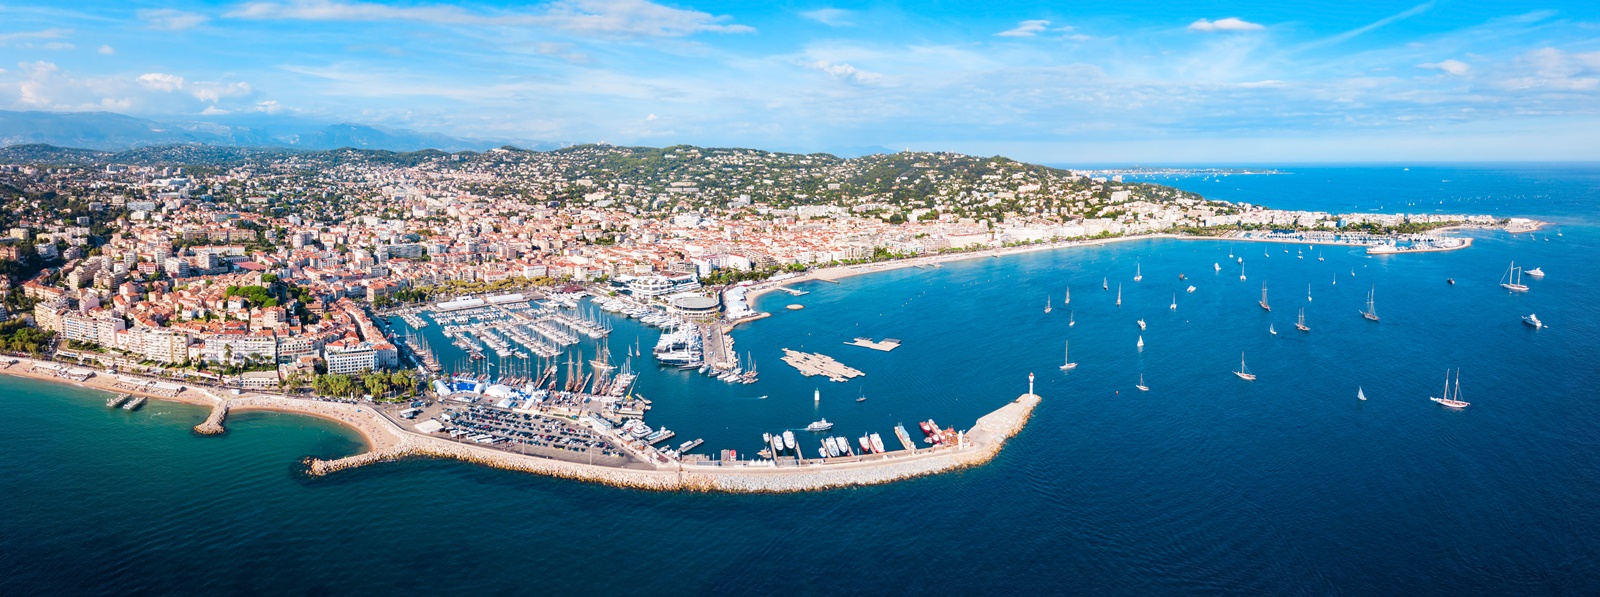 Cannes HOTEL|カンヌ ホテル